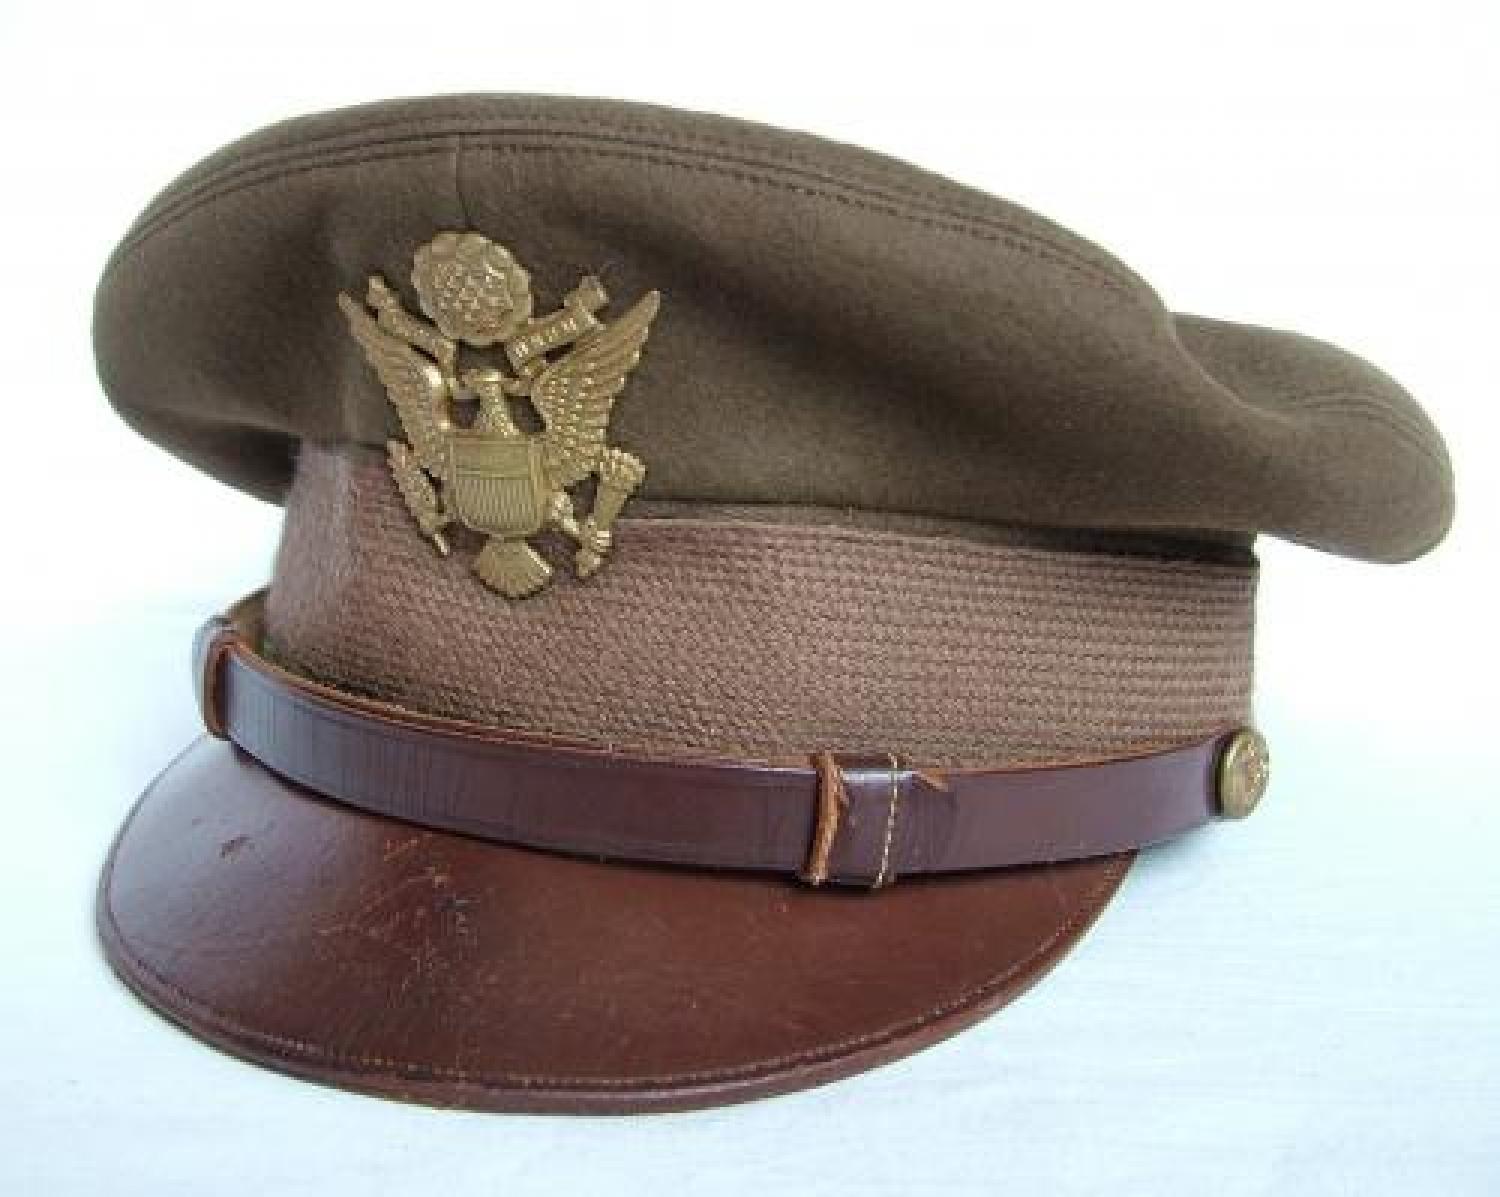 USAAF Officers' Visor Cap - English Made